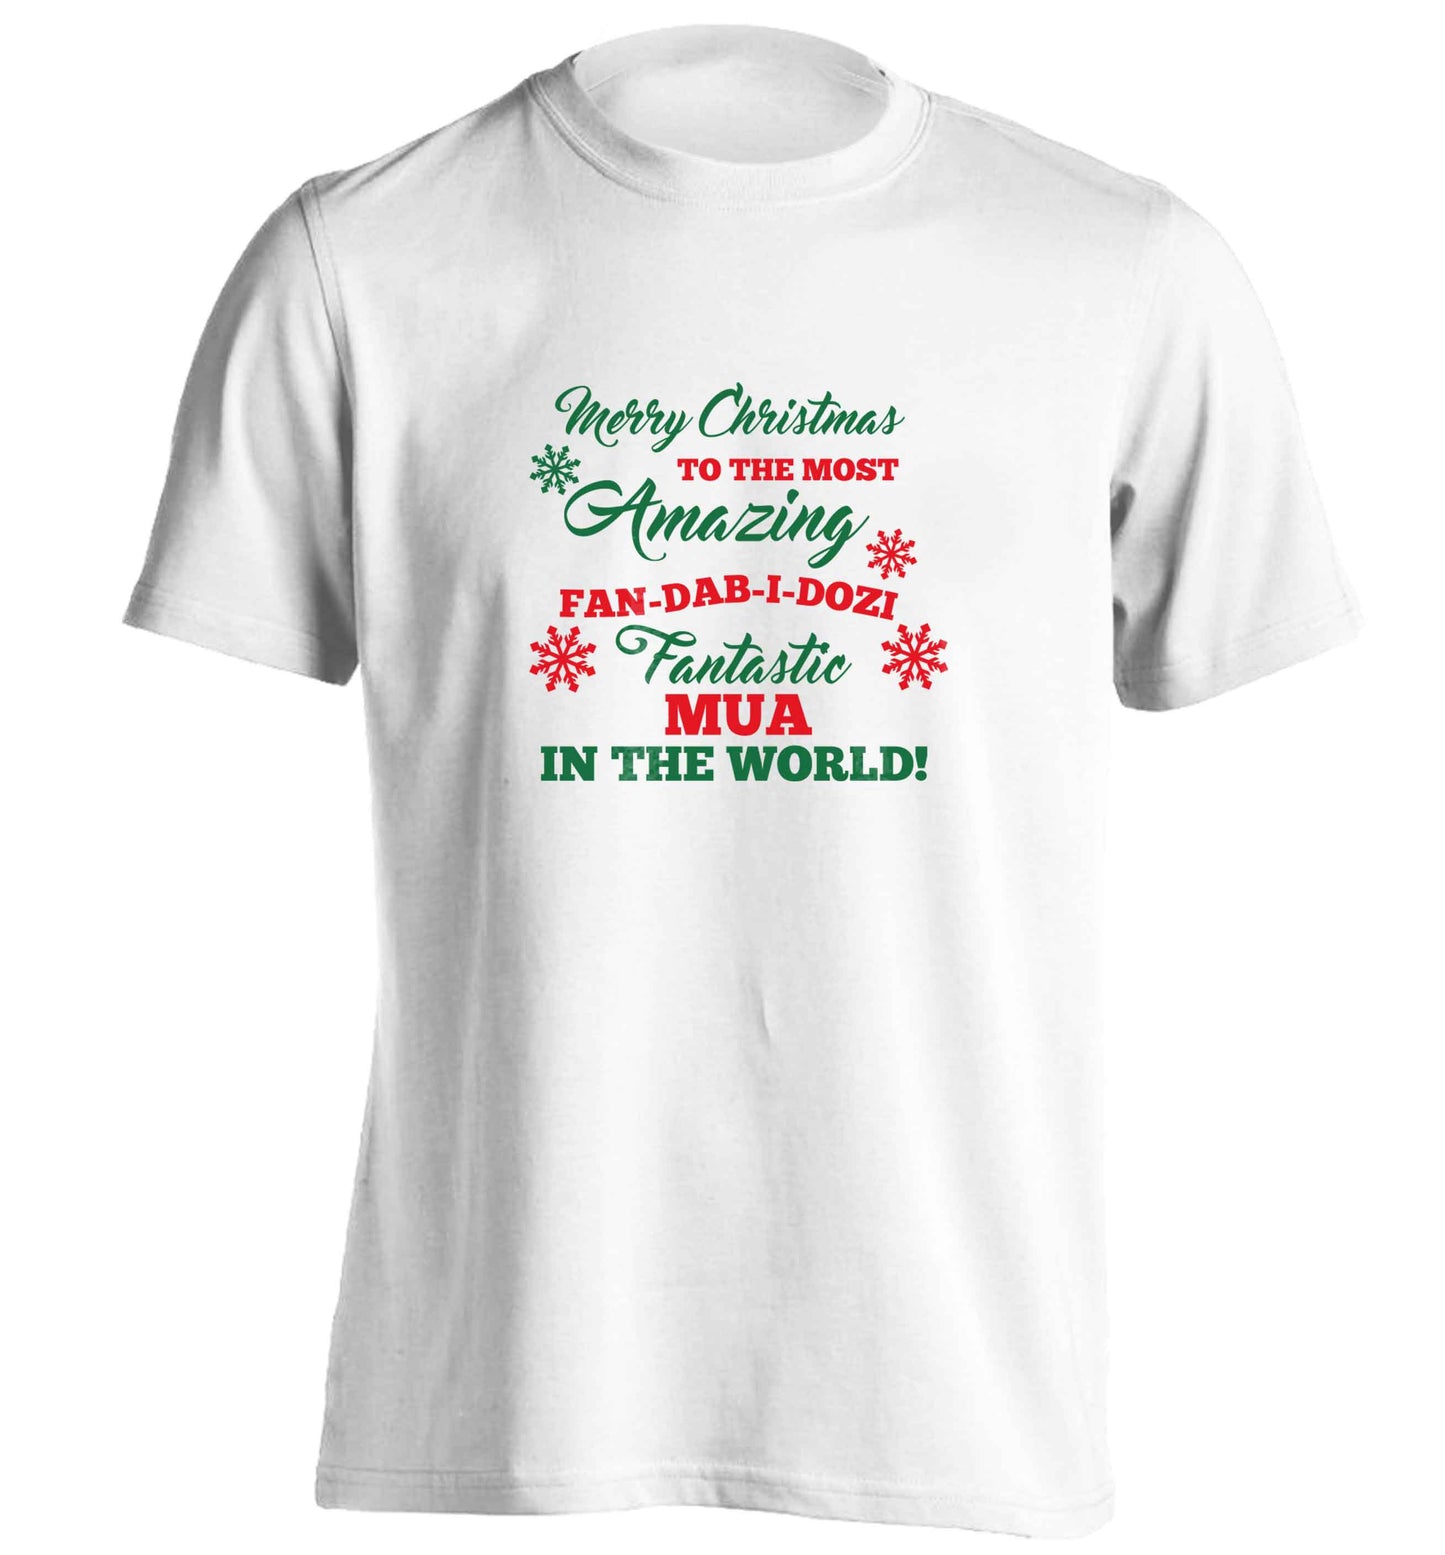 Merry Christmas to the most amazing fan-dab-i-dozi fantasic MUA in the world adults unisex white Tshirt 2XL